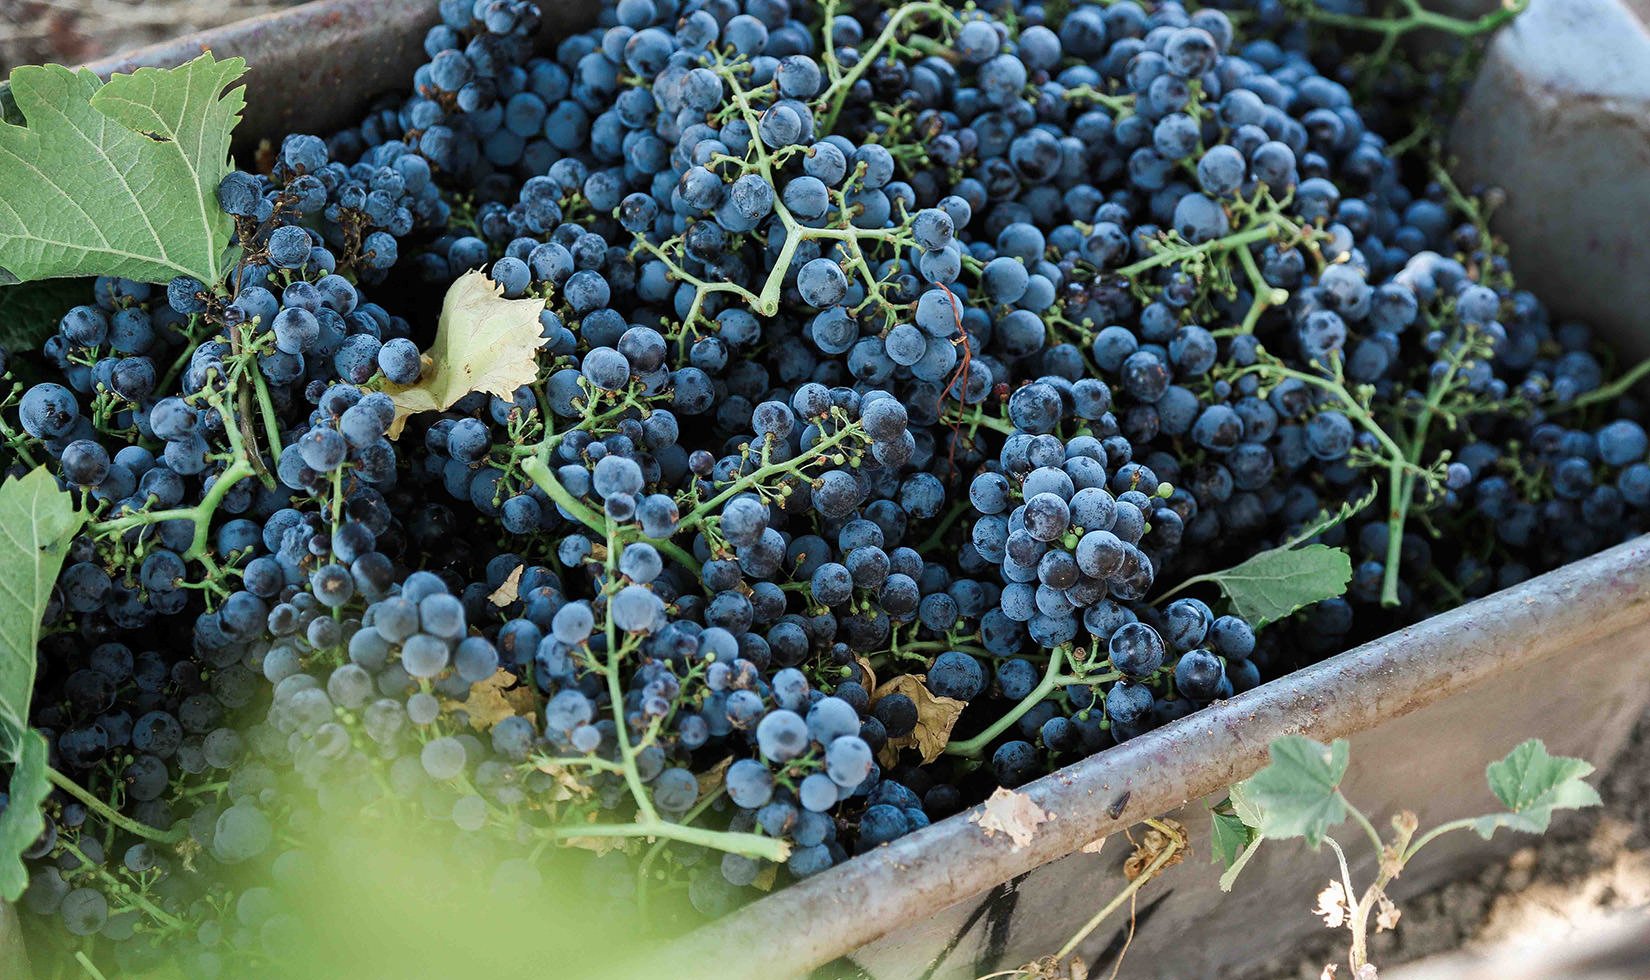 Jordan merlot grapes in bin at harvest